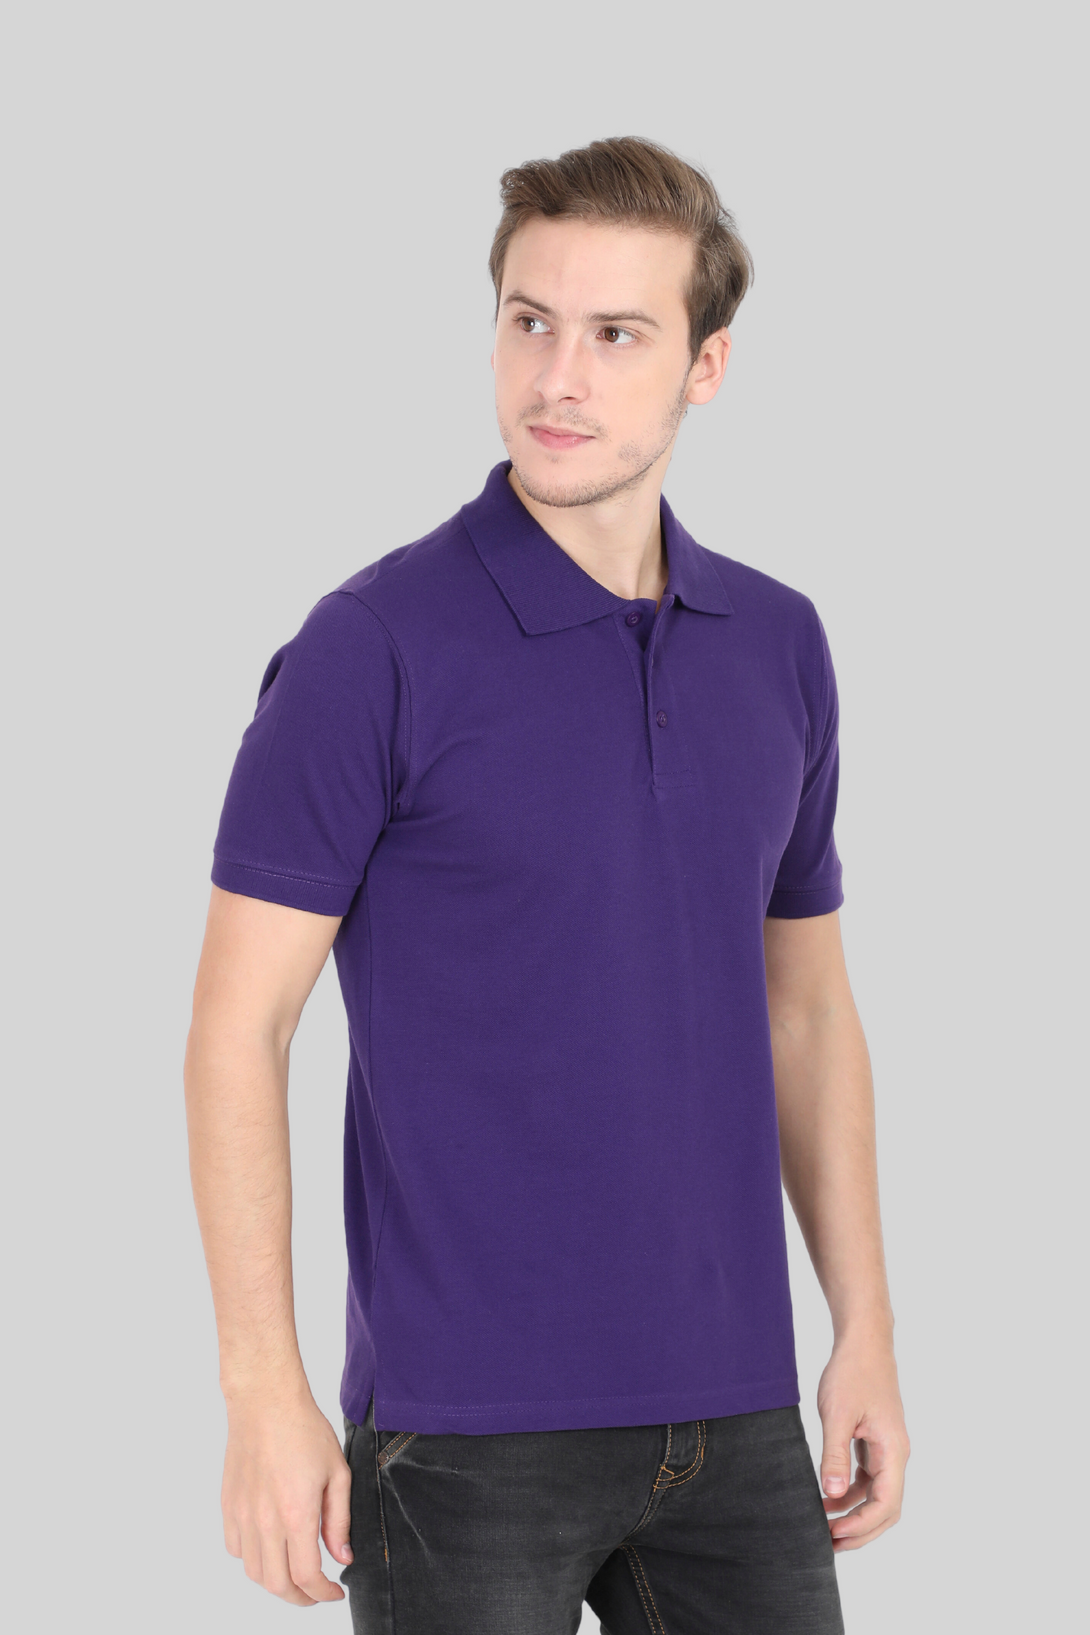 Purple Polo T-Shirt For Men - WowWaves - 2